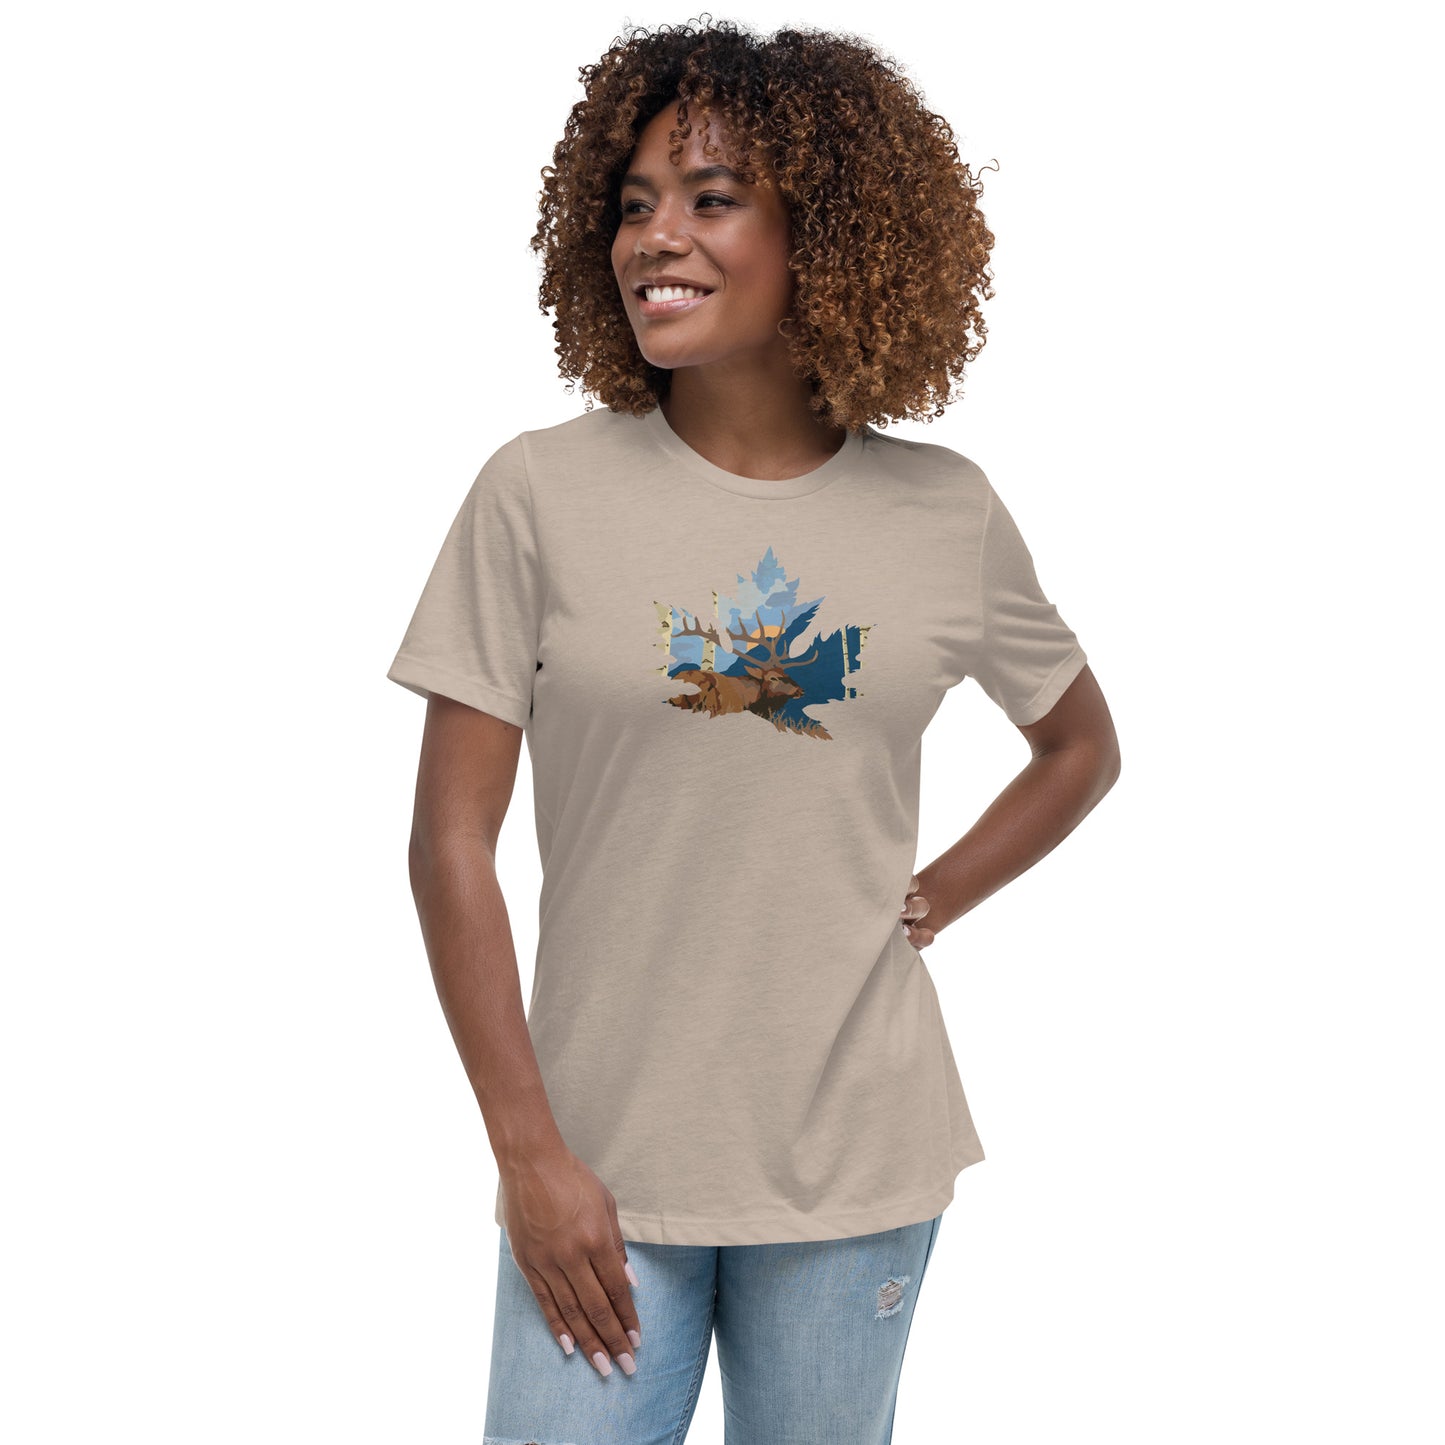 "Tundra" - Women's Relaxed T-Shirt